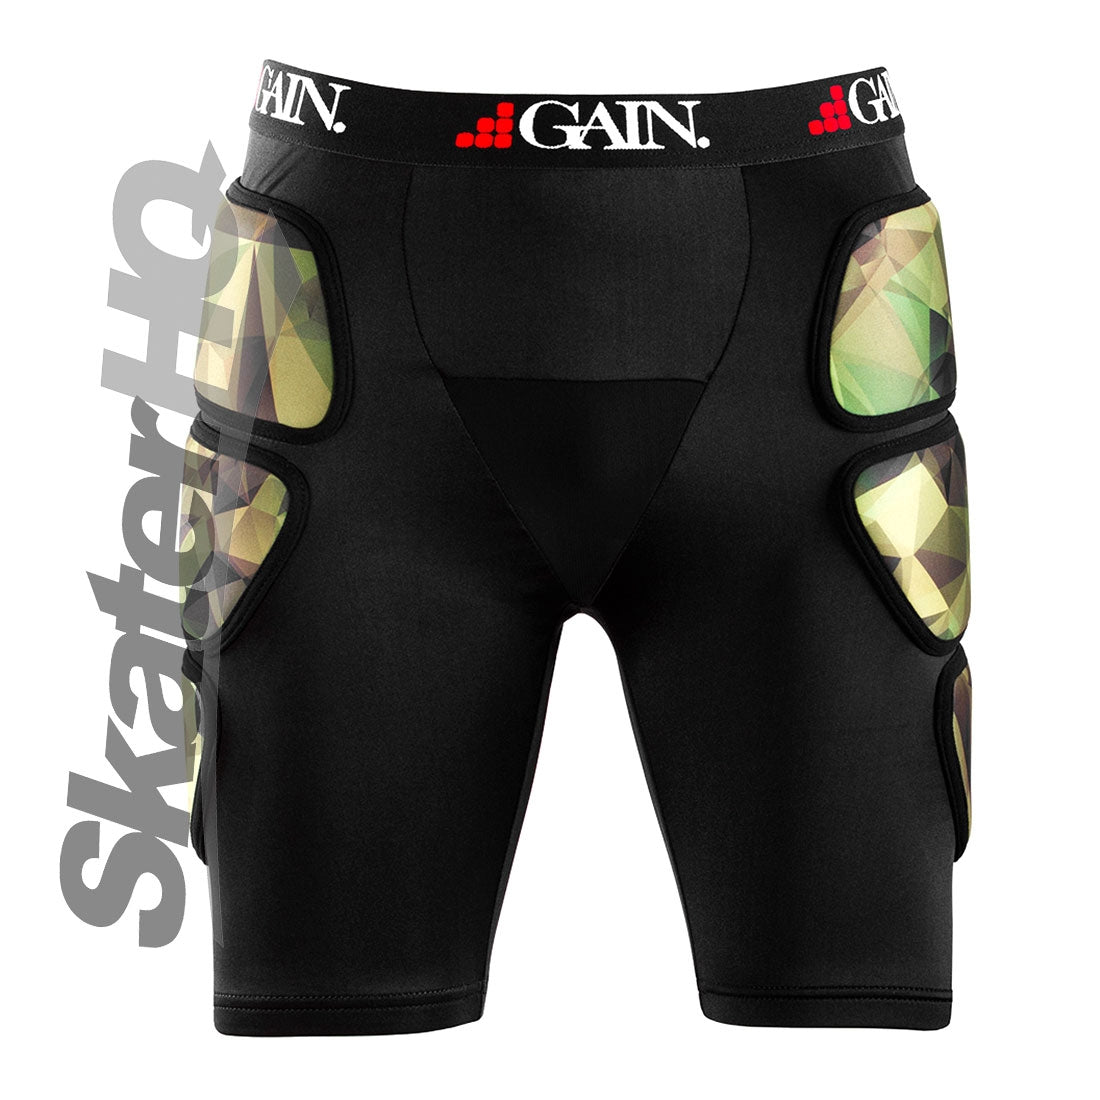 GAIN Sleeper Hip/Bum Pads - Camo - XL Protective Gear